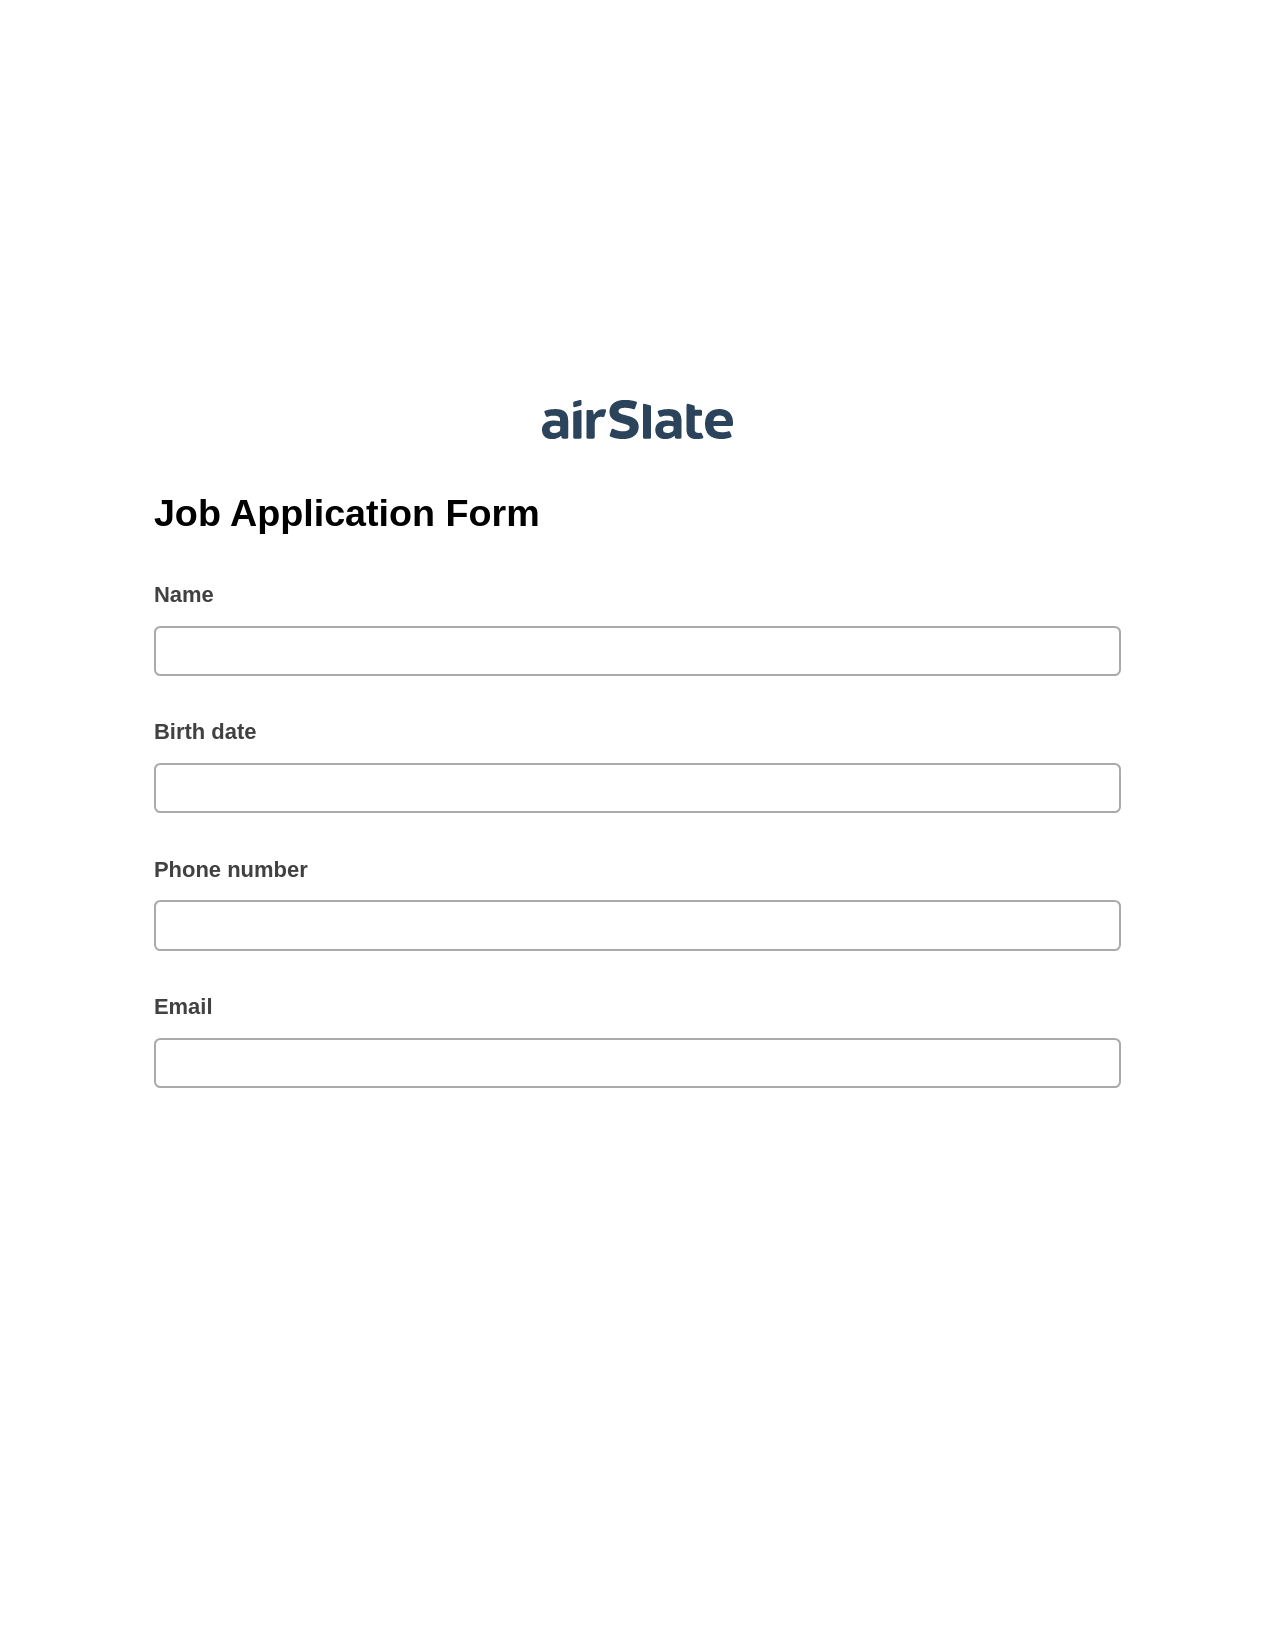 Job Application Form Pre-fill from Salesforce Record Bot, Audit Trail Bot, Slack Notification Postfinish Bot